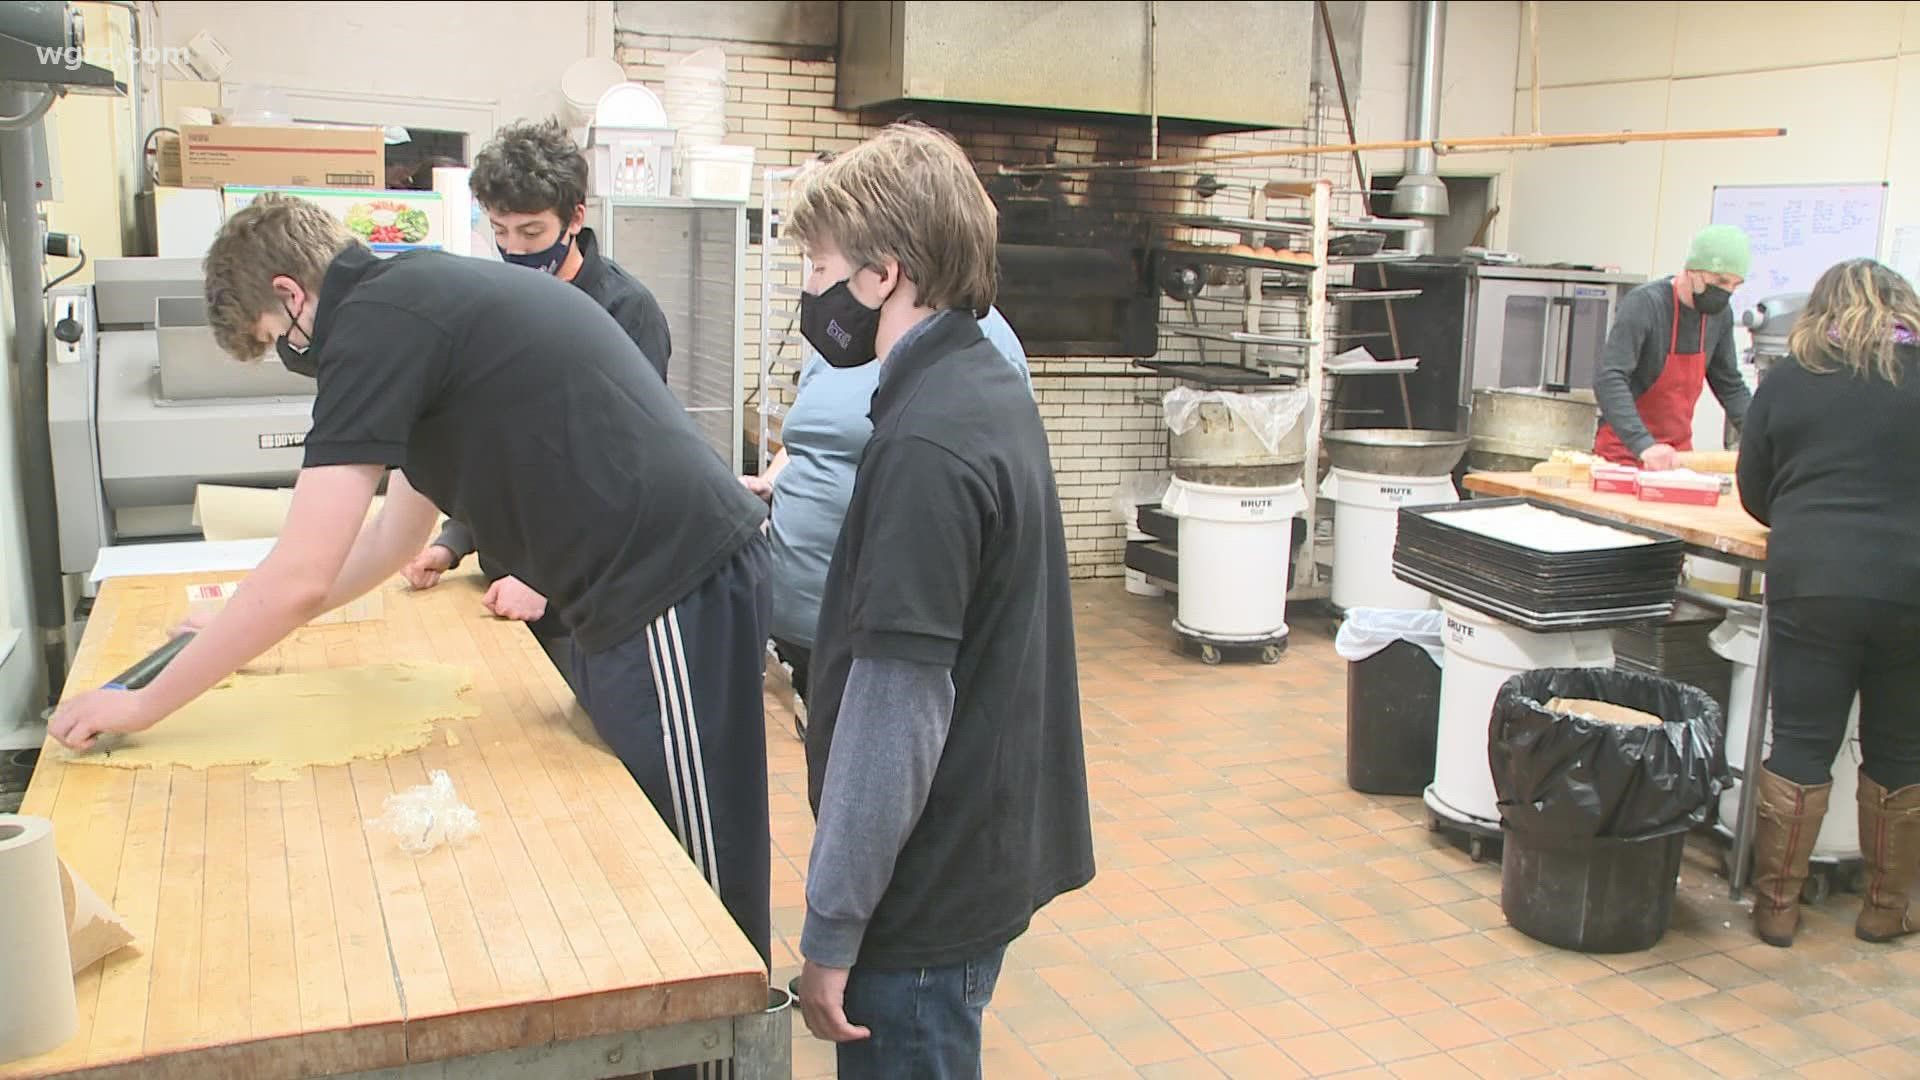 Students get job training while baking Bills cookie kits